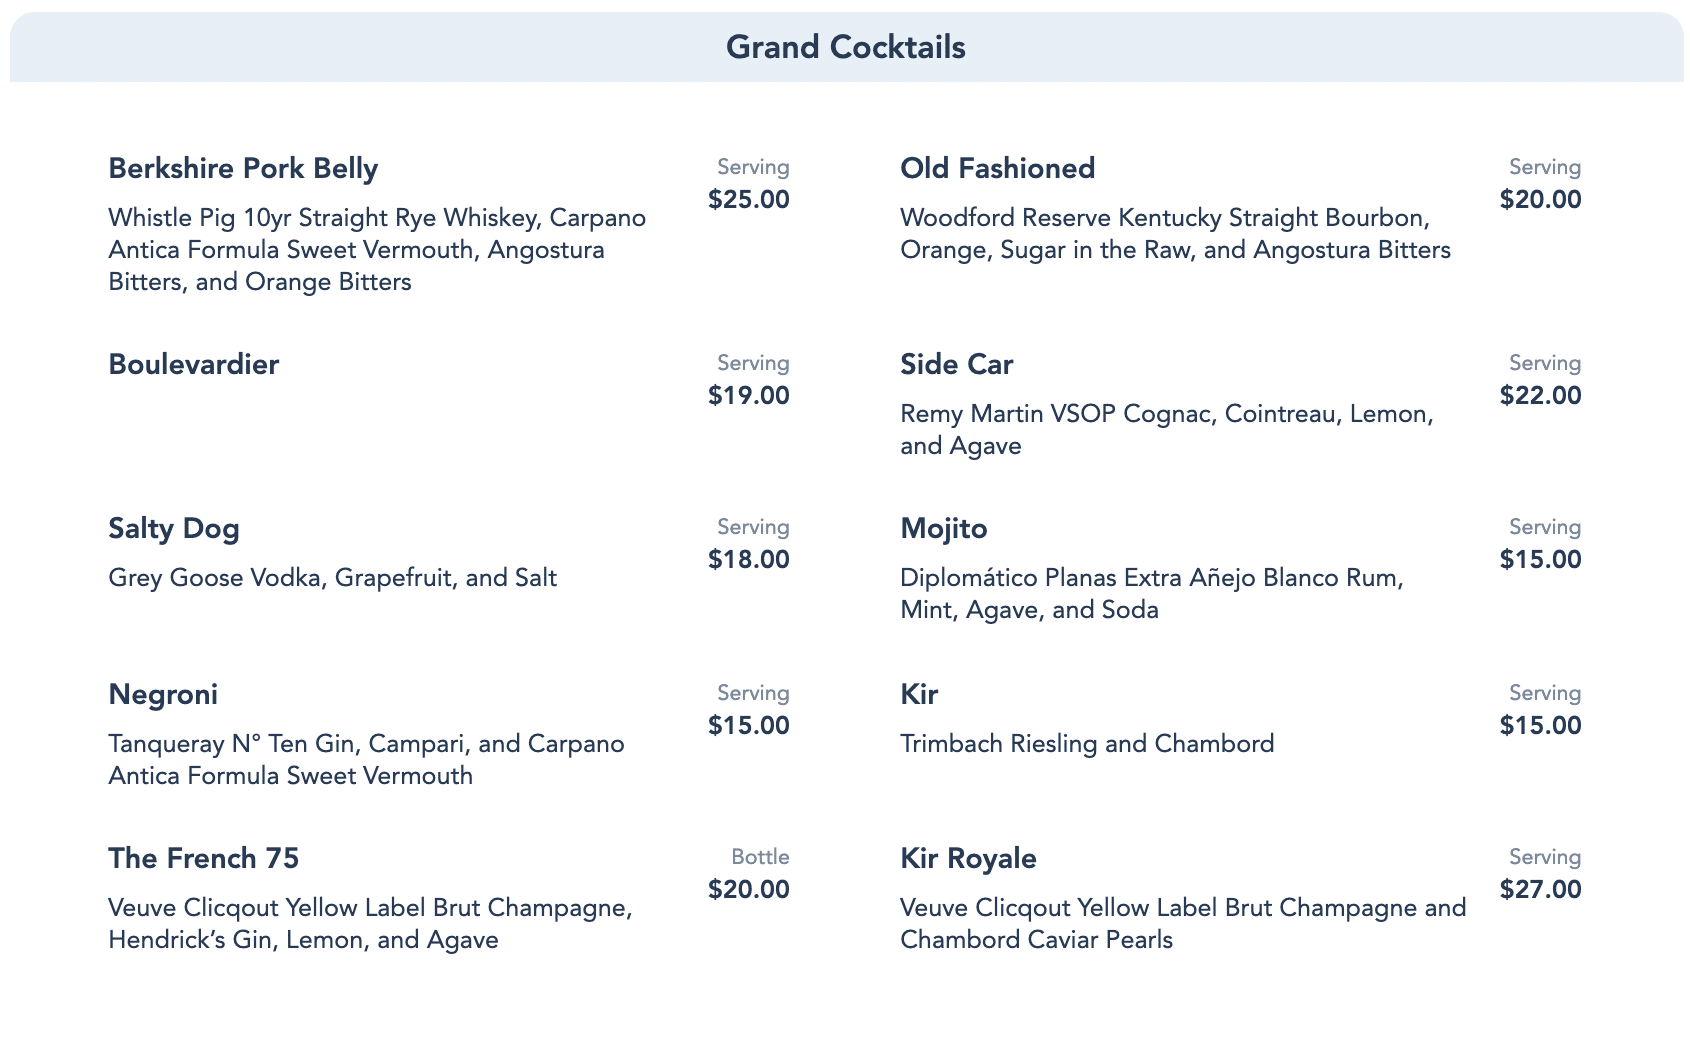 Enchanted Rose Menu - Grand Cocktails